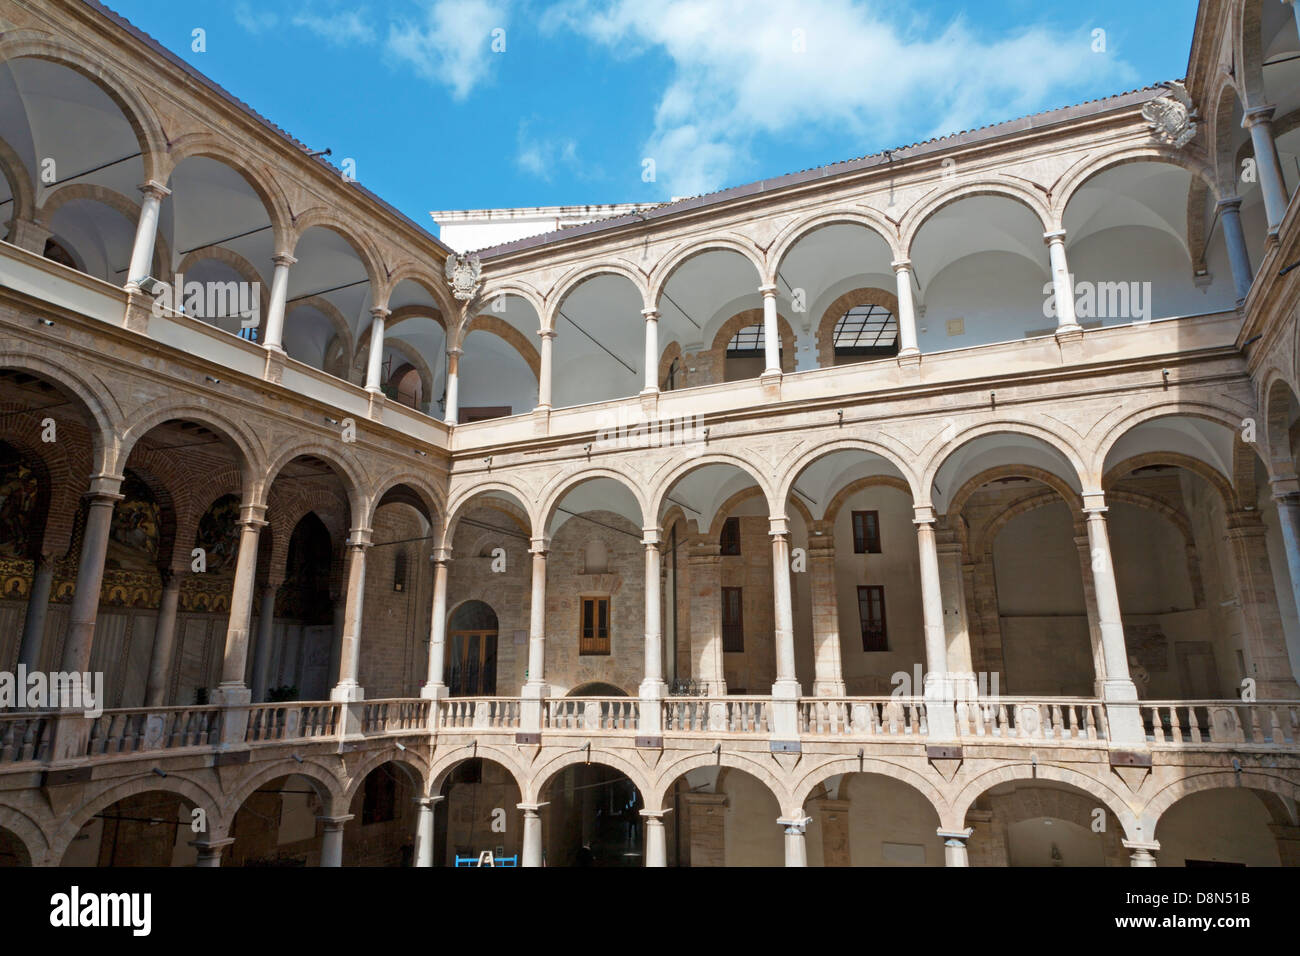 Palermo - Atrium of Norman palace or Palazzo Reale Stock Photo